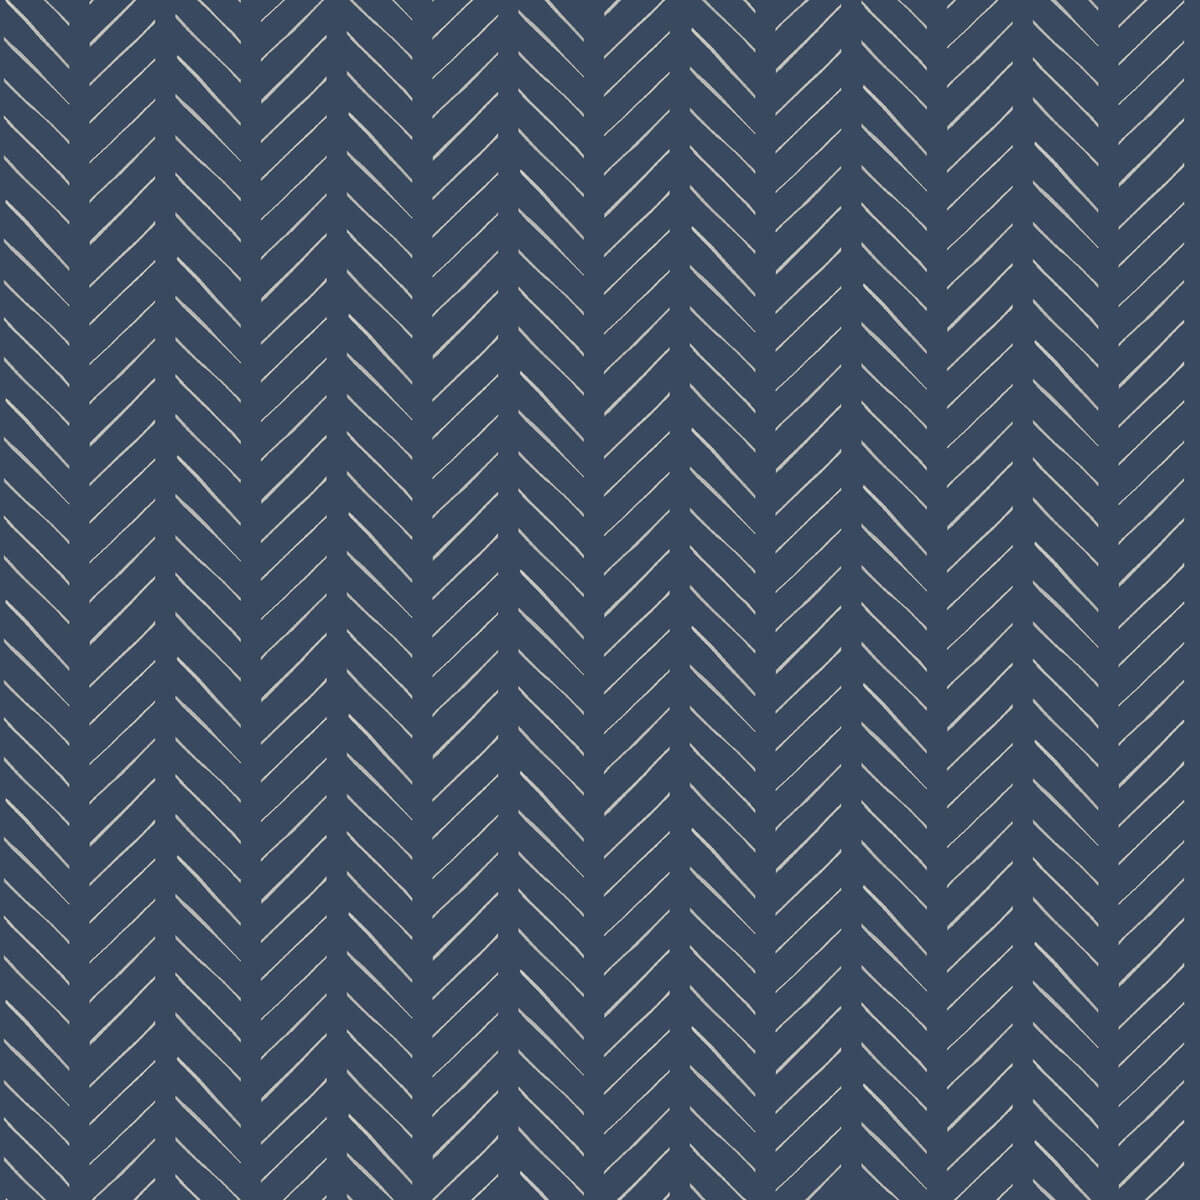 Magnolia Home Pick-Up Sticks Peel & Stick Wallpaper - Navy Blue